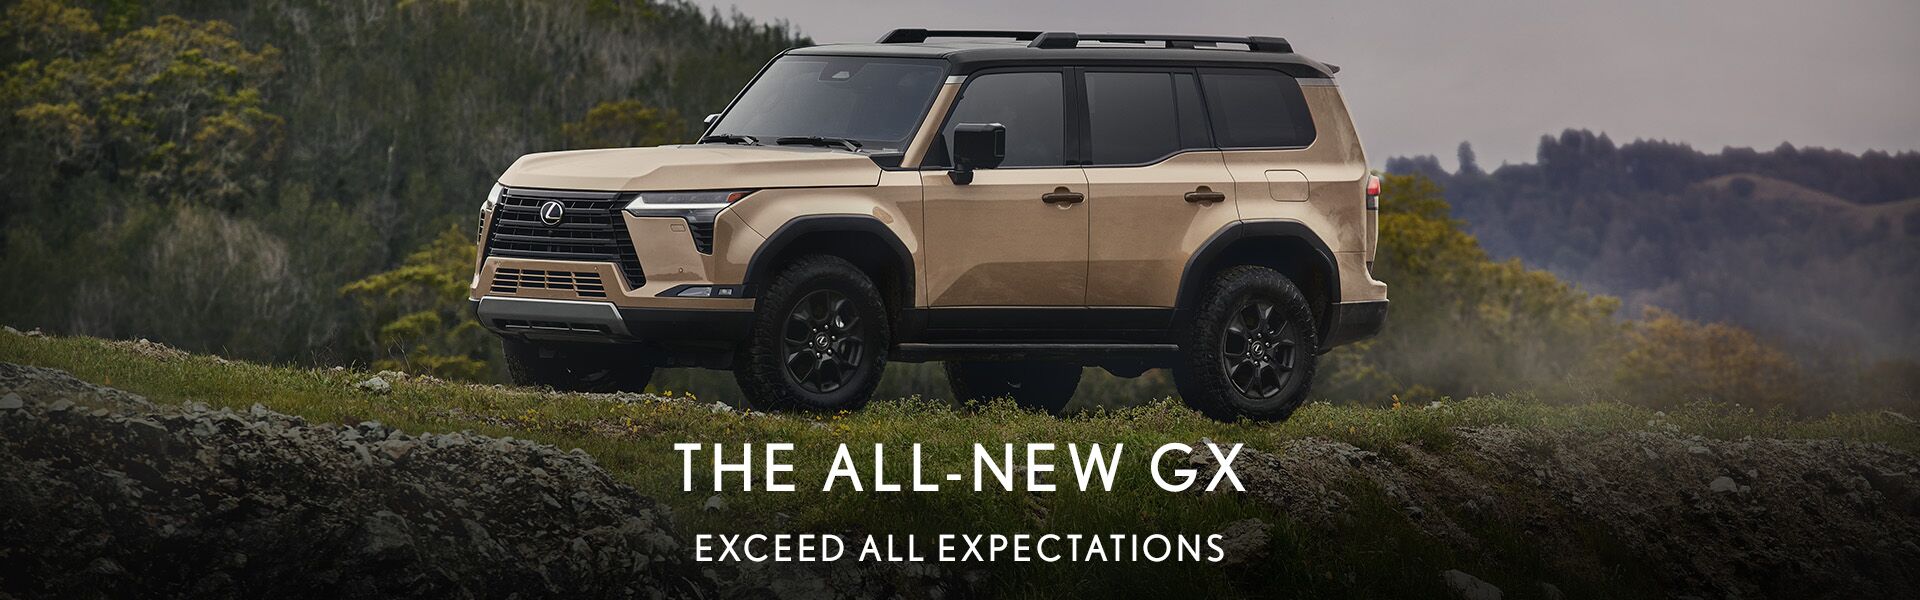 All-New GX at Lexus of Tucson Auto Mall Tucson AZ